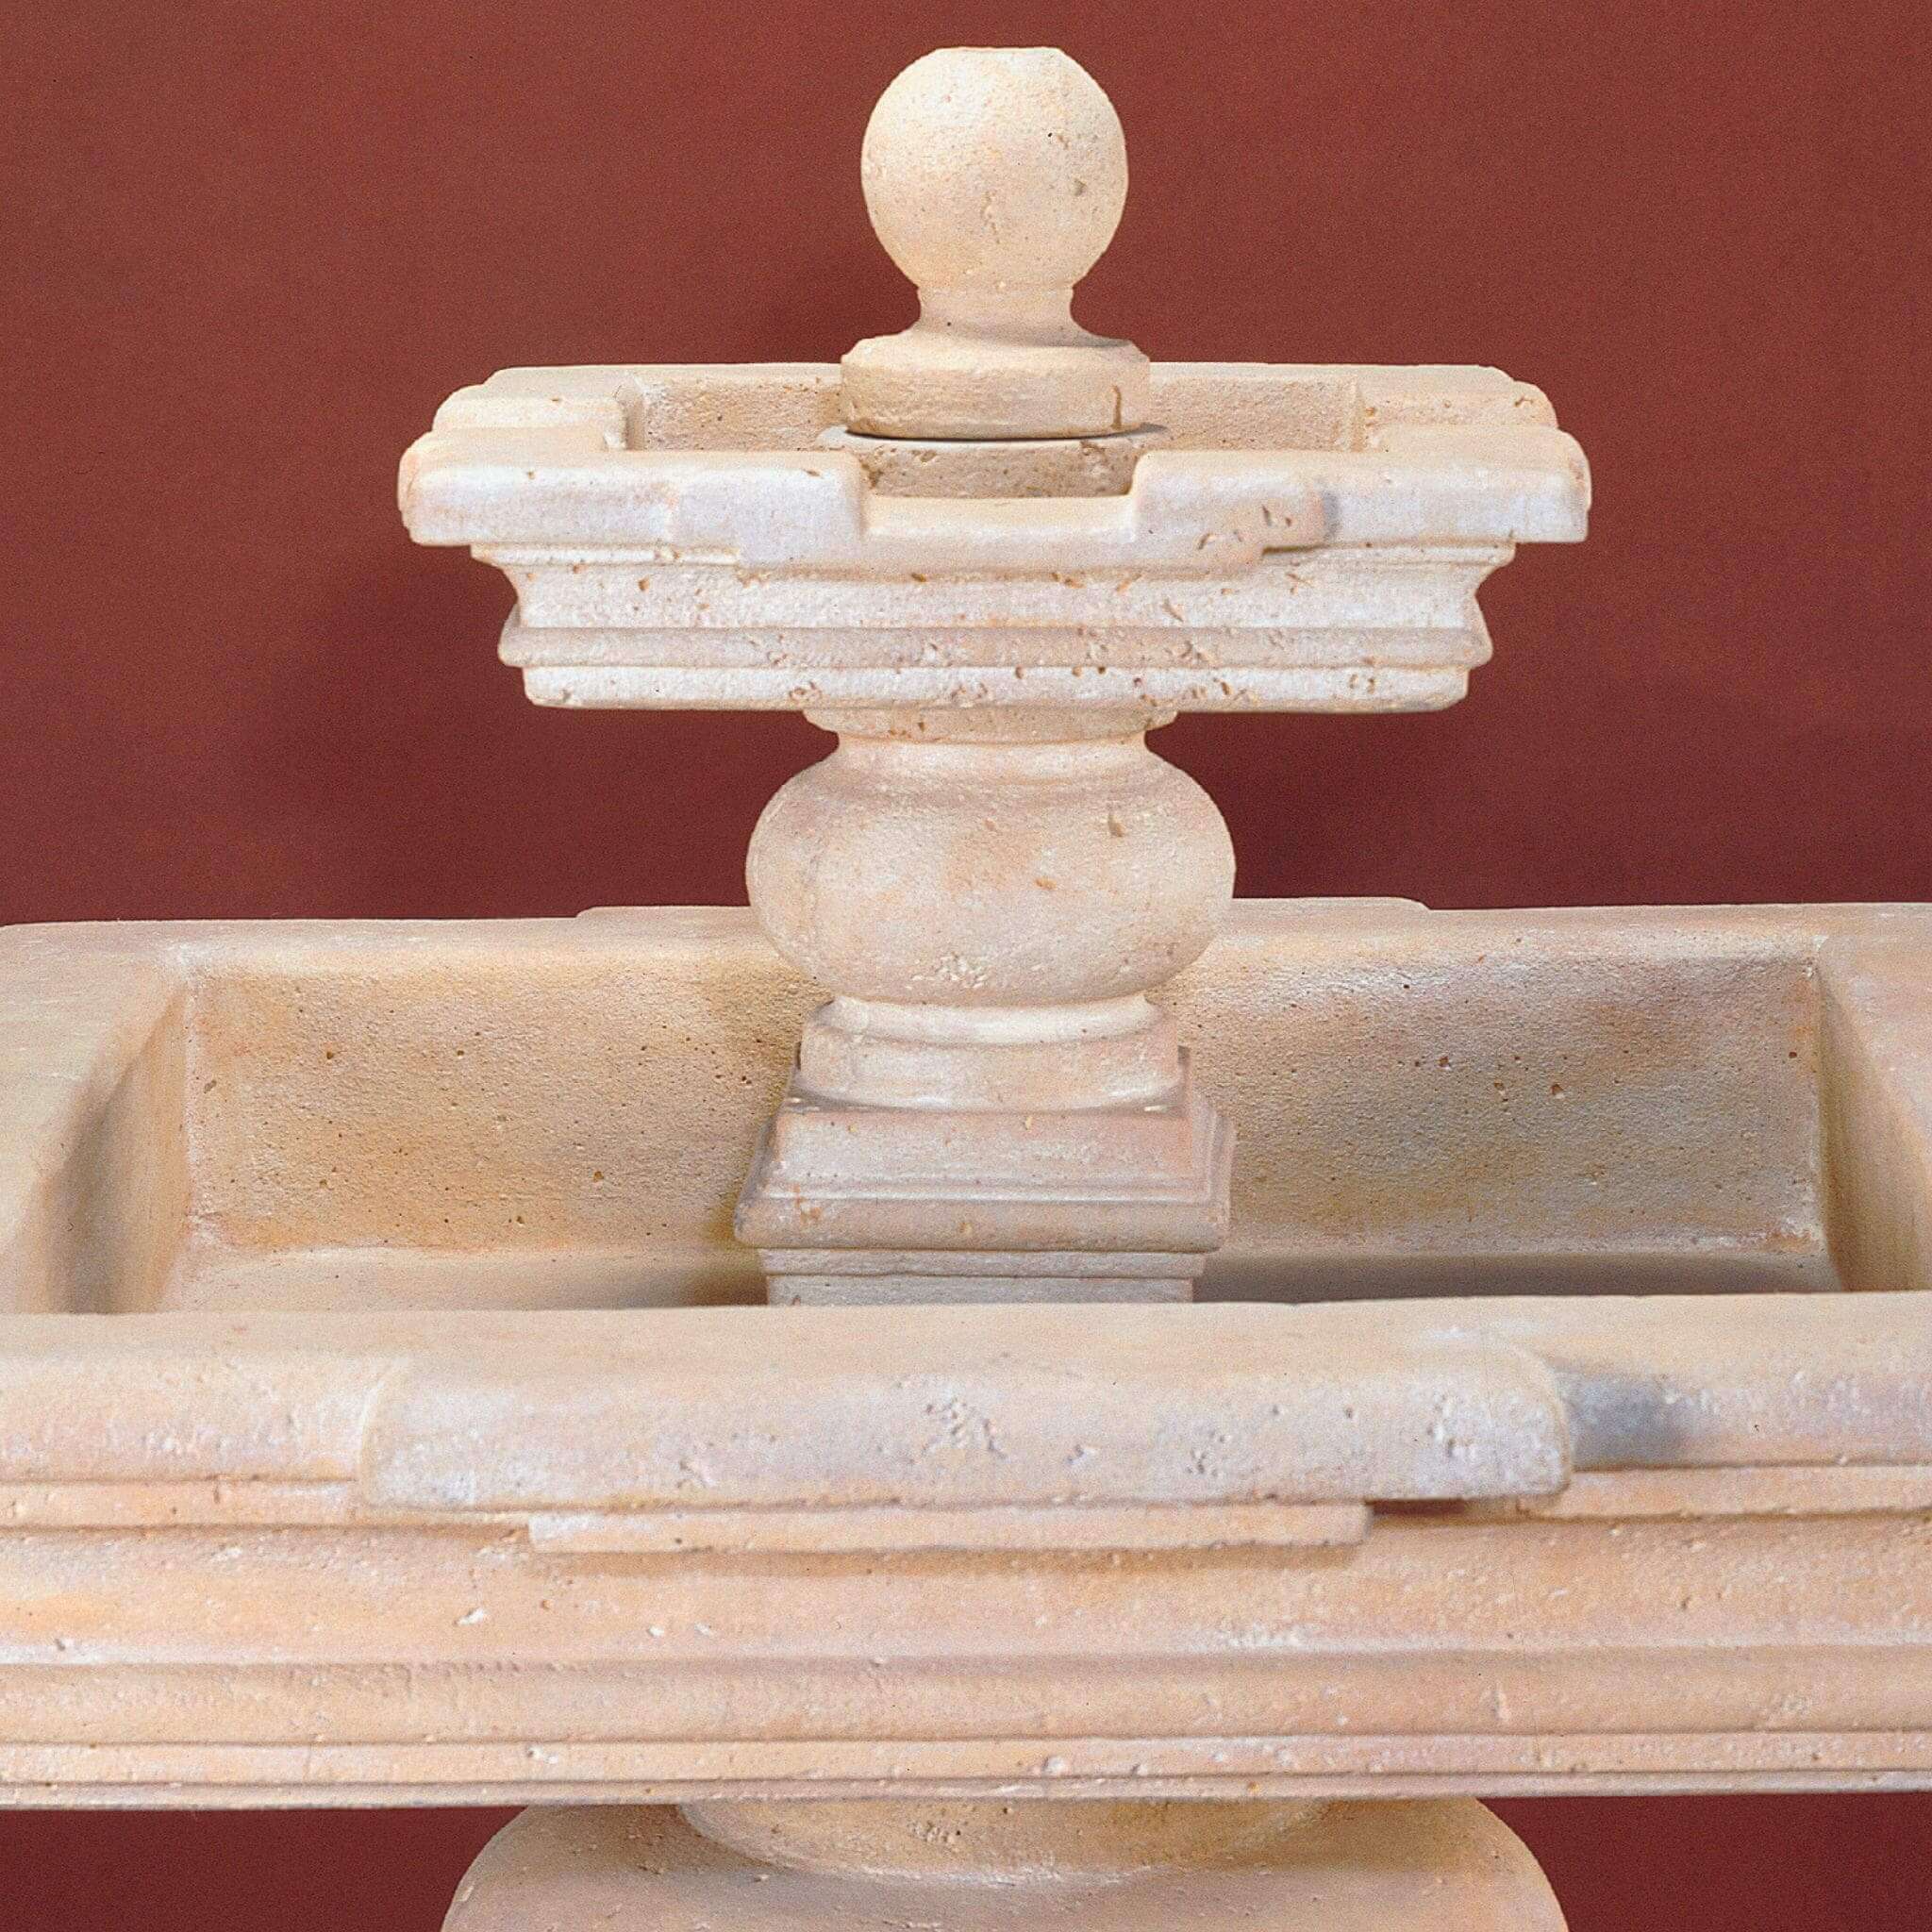 Fontana Quadra 2-Tier Concrete Fountain - Giannini #1080